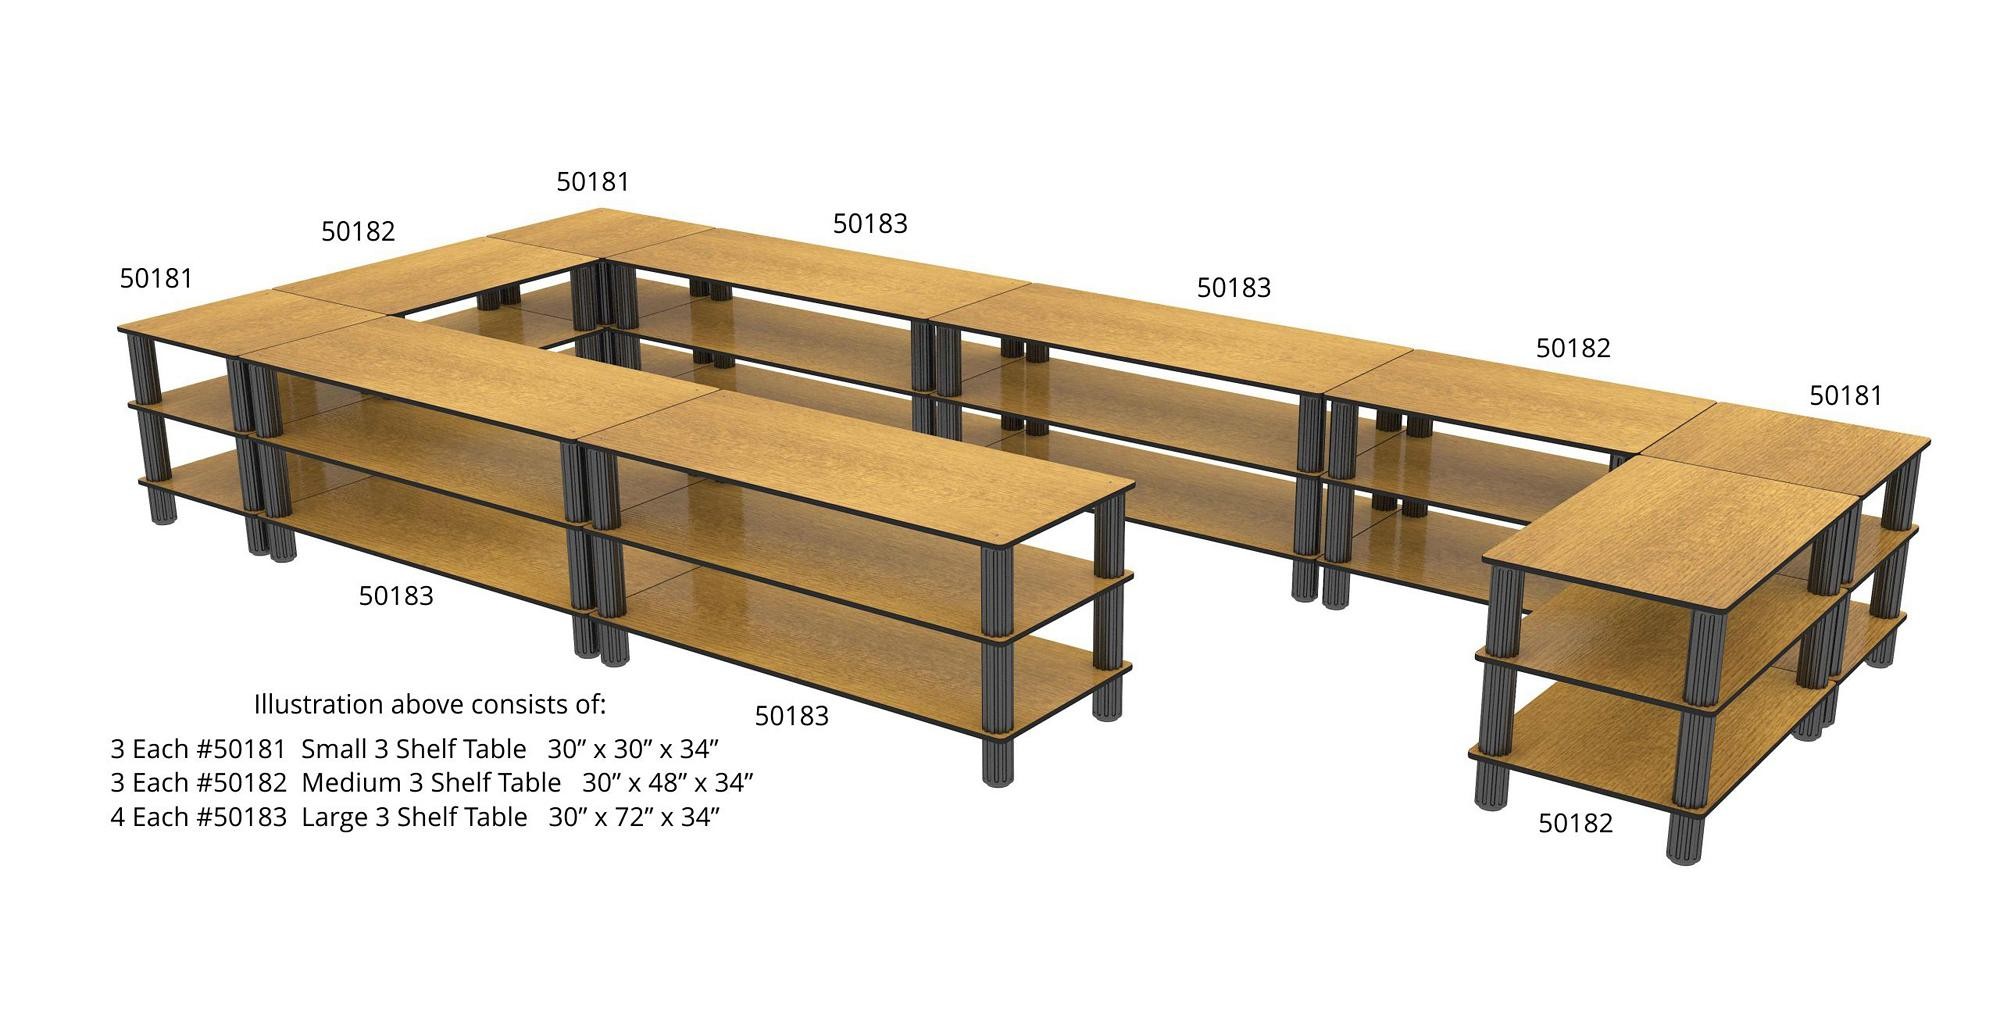 Bon Chef 50197WVWALNUT Large Corner Shelf Flex Table with Walnut Finish, 30" x 72" x 46"